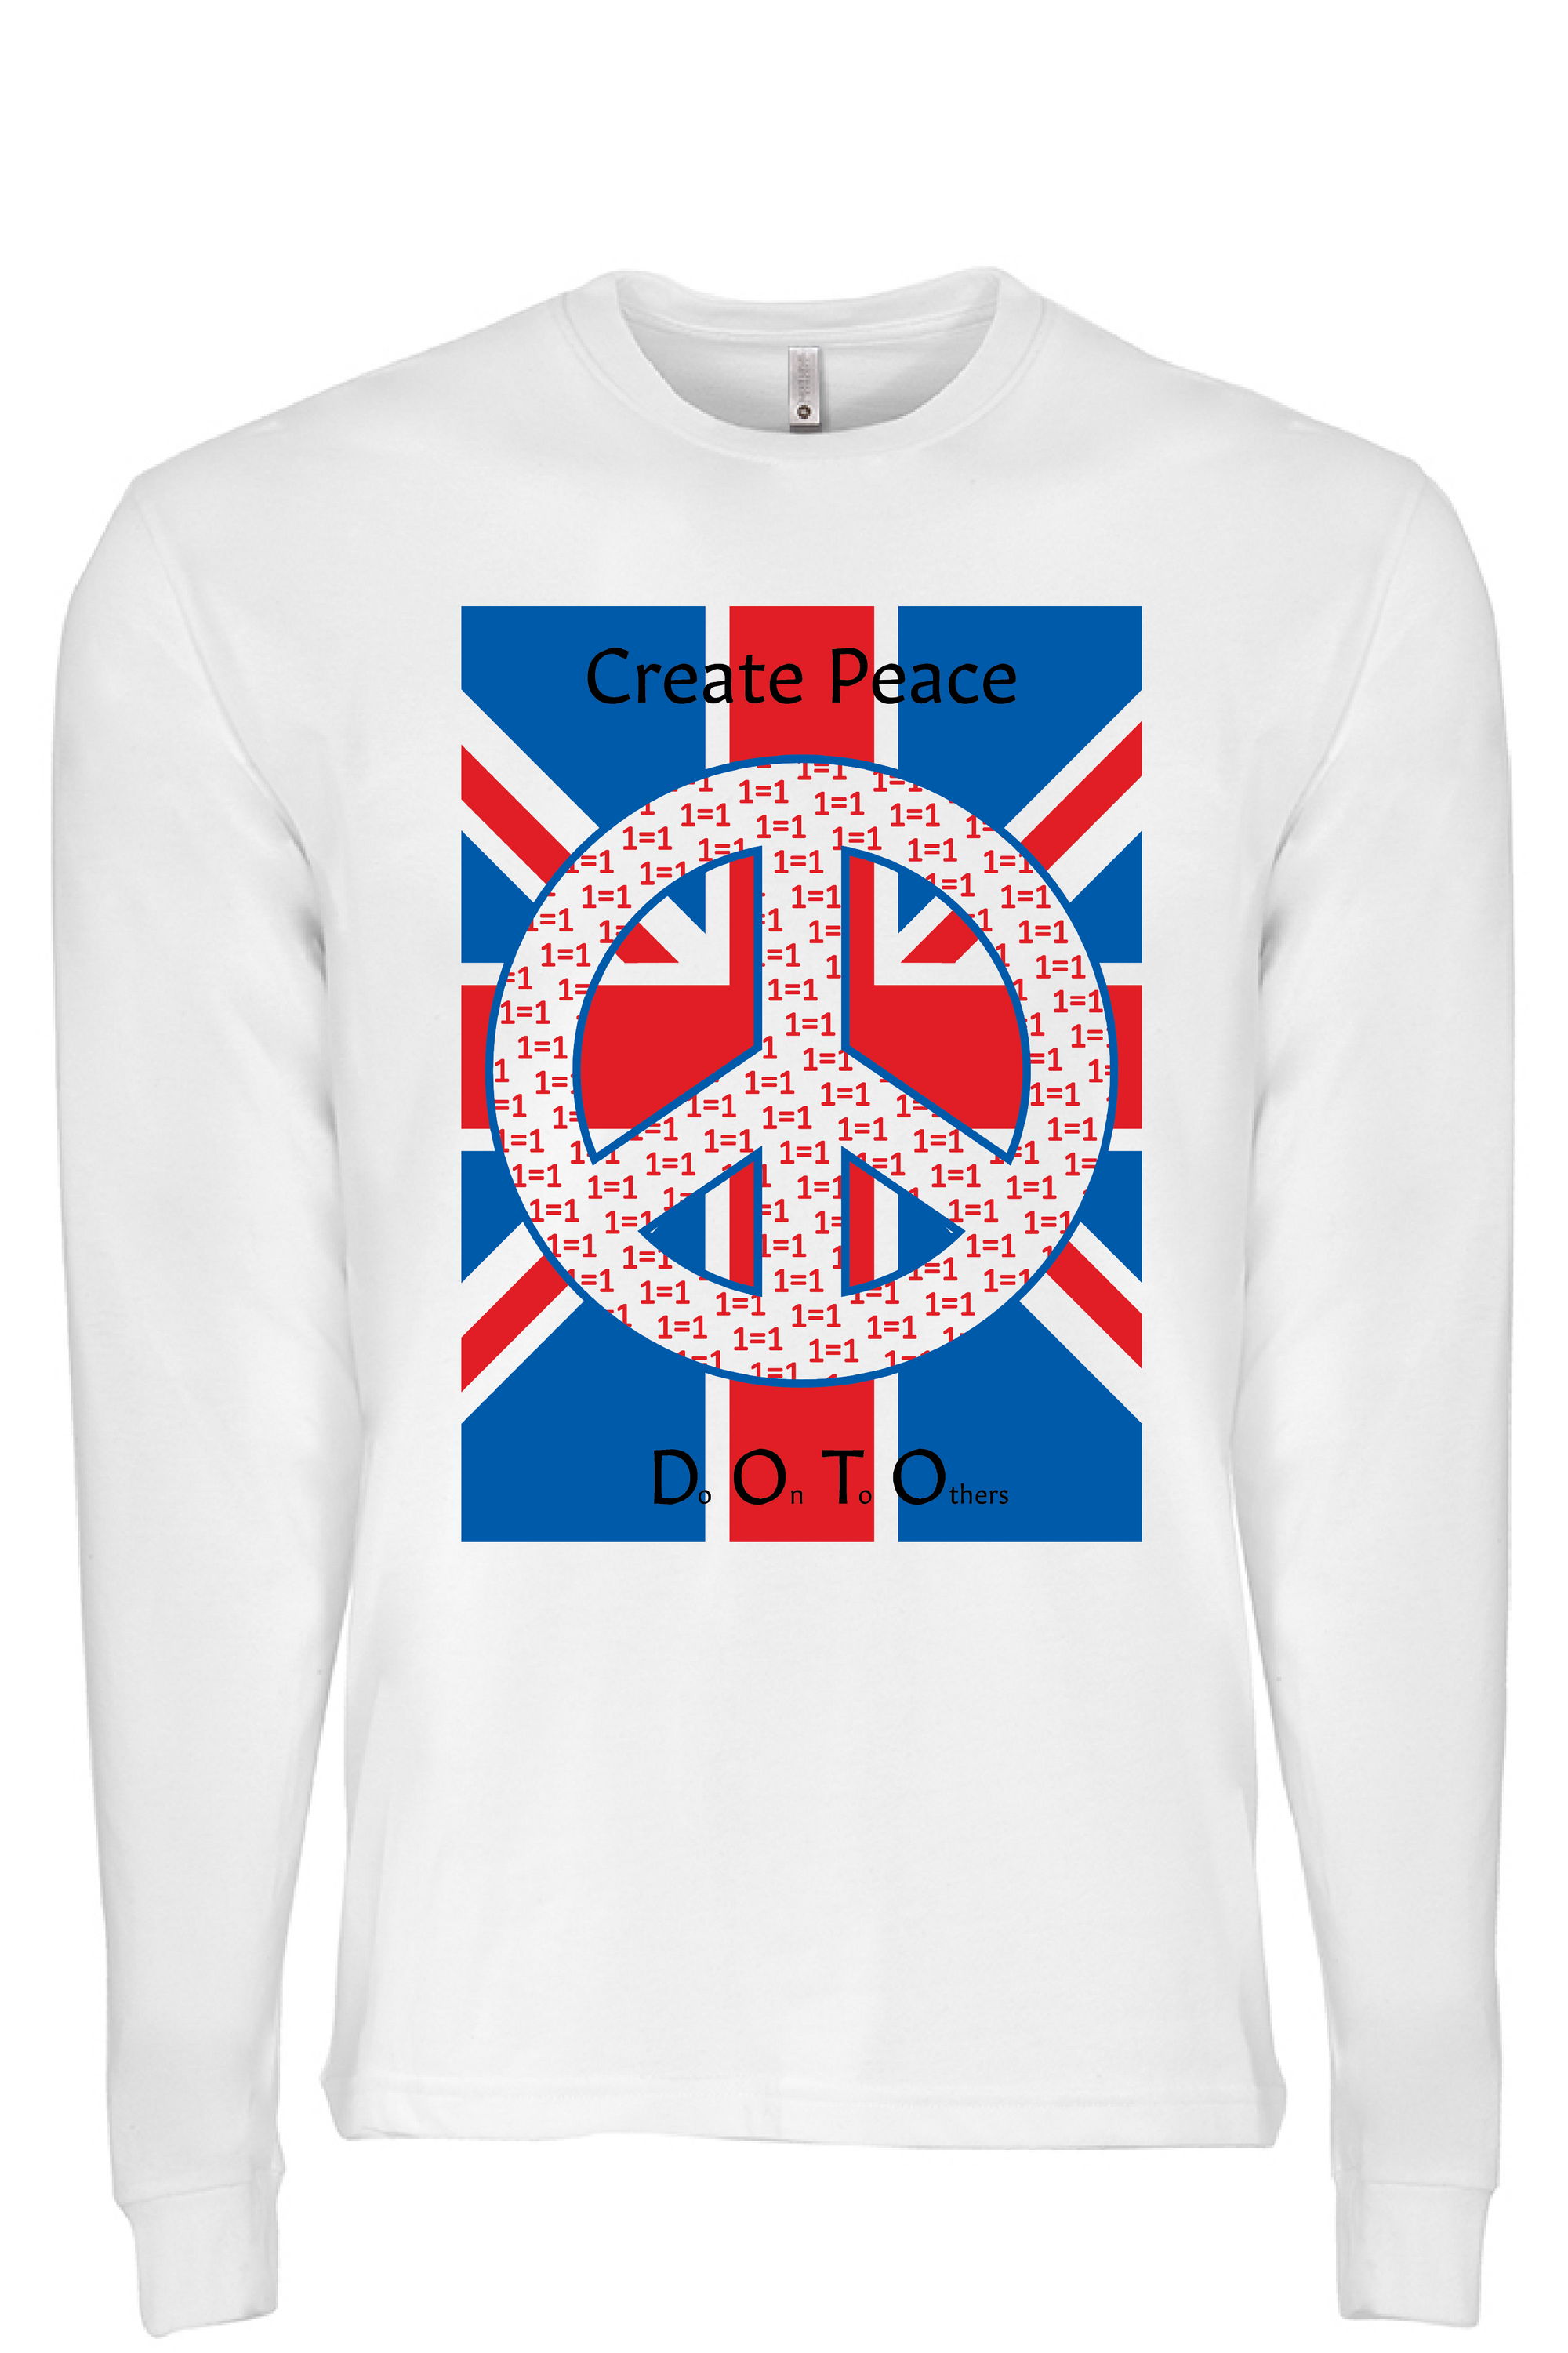 CREATE PEACE - Great Britain - Long sleeve Sueded Tee